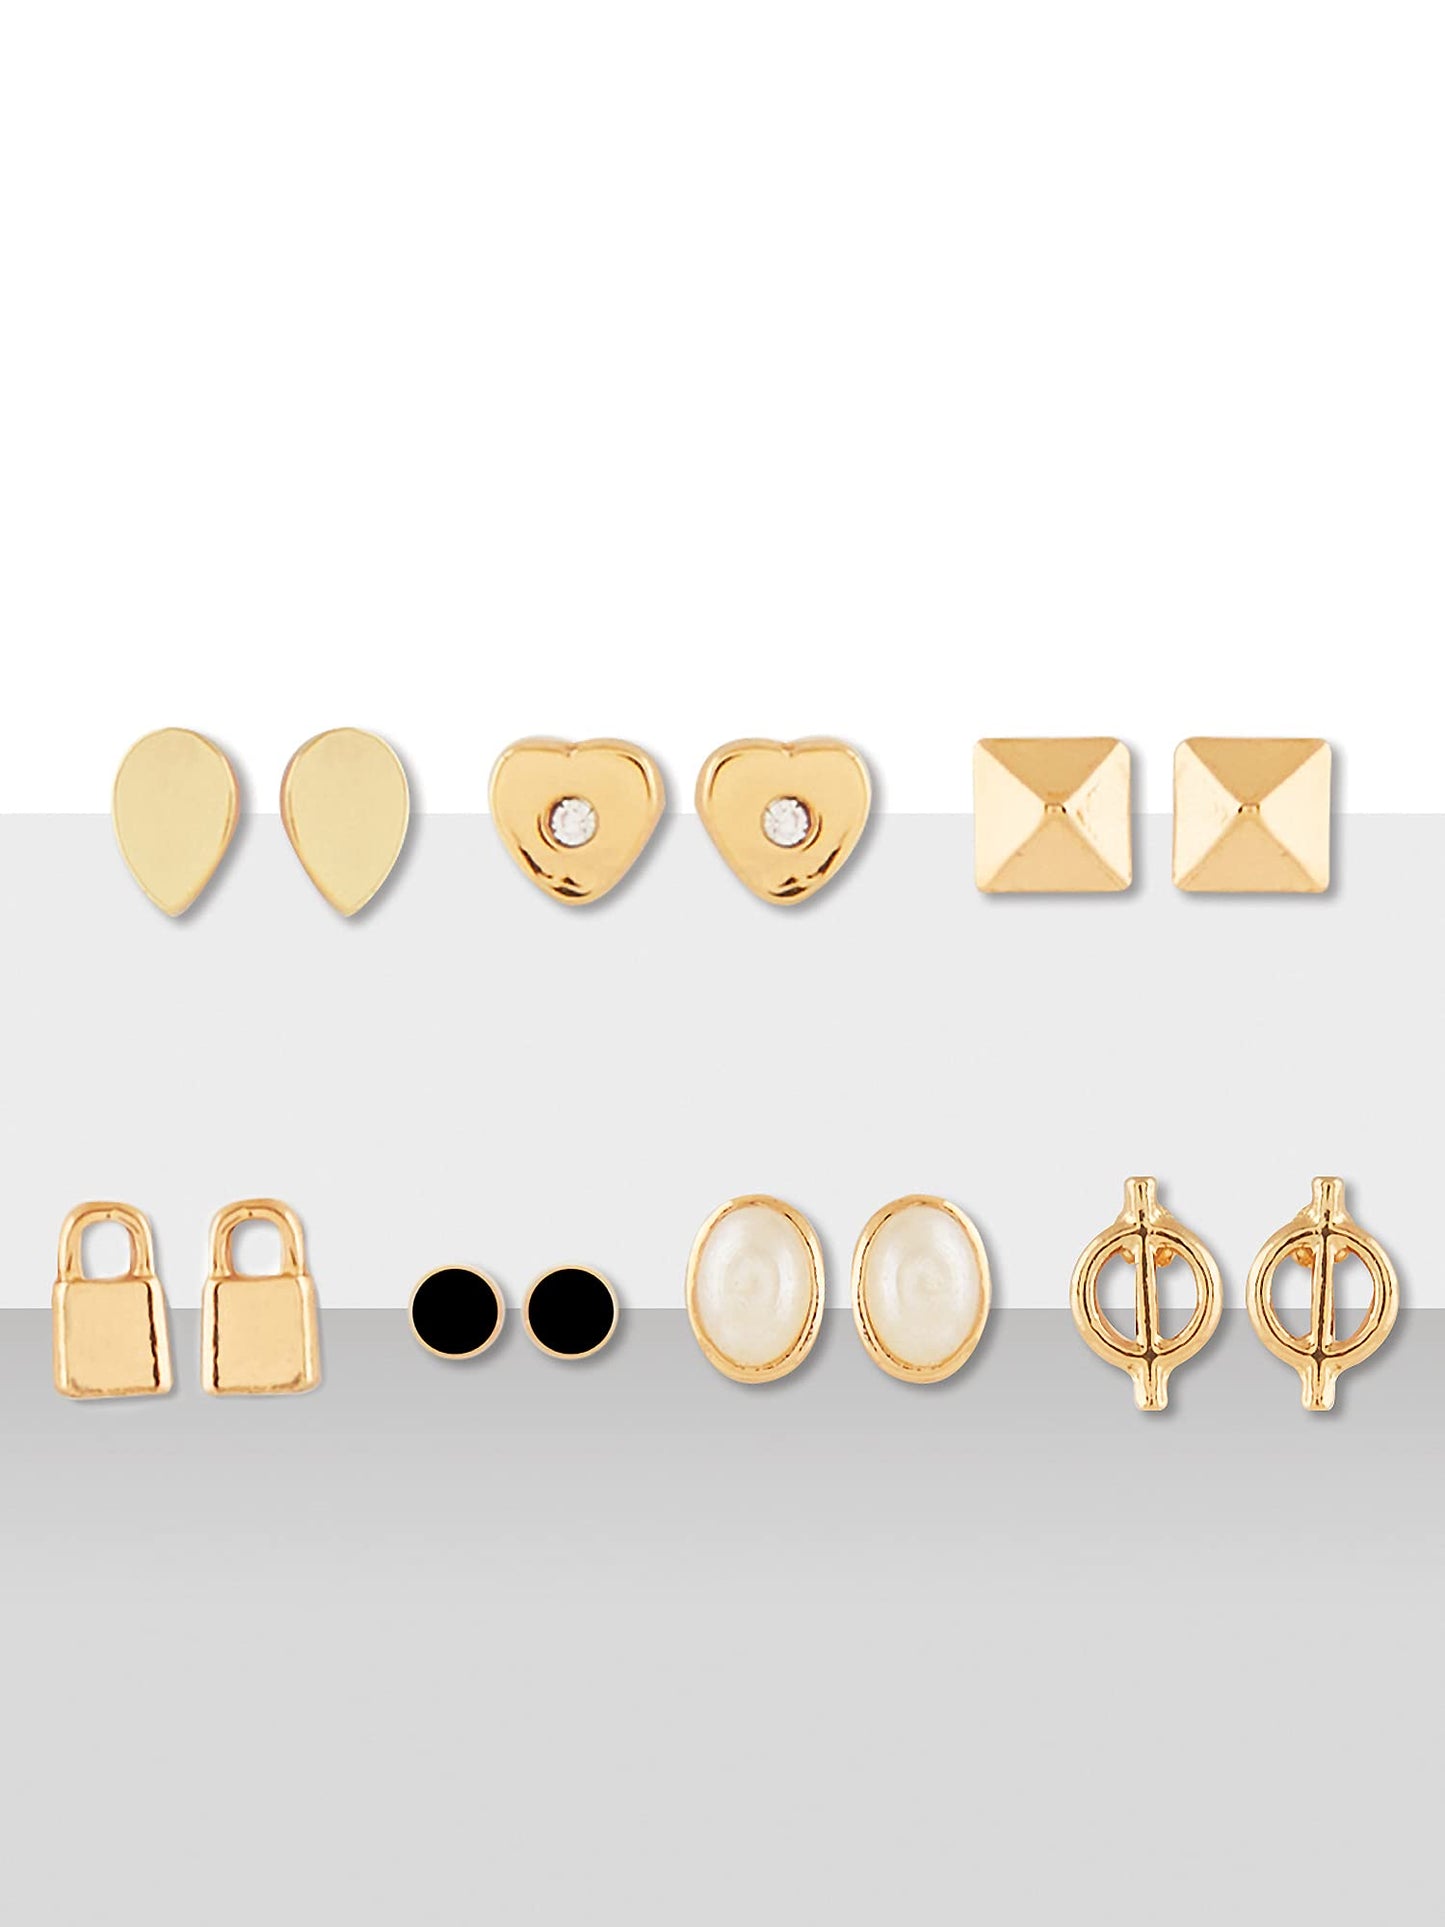 ZAVERI PEARLS Gold Tone Set Of 25 Contemporary Studs, Drop & Semi-Hoop Earrings-ZPFK10652